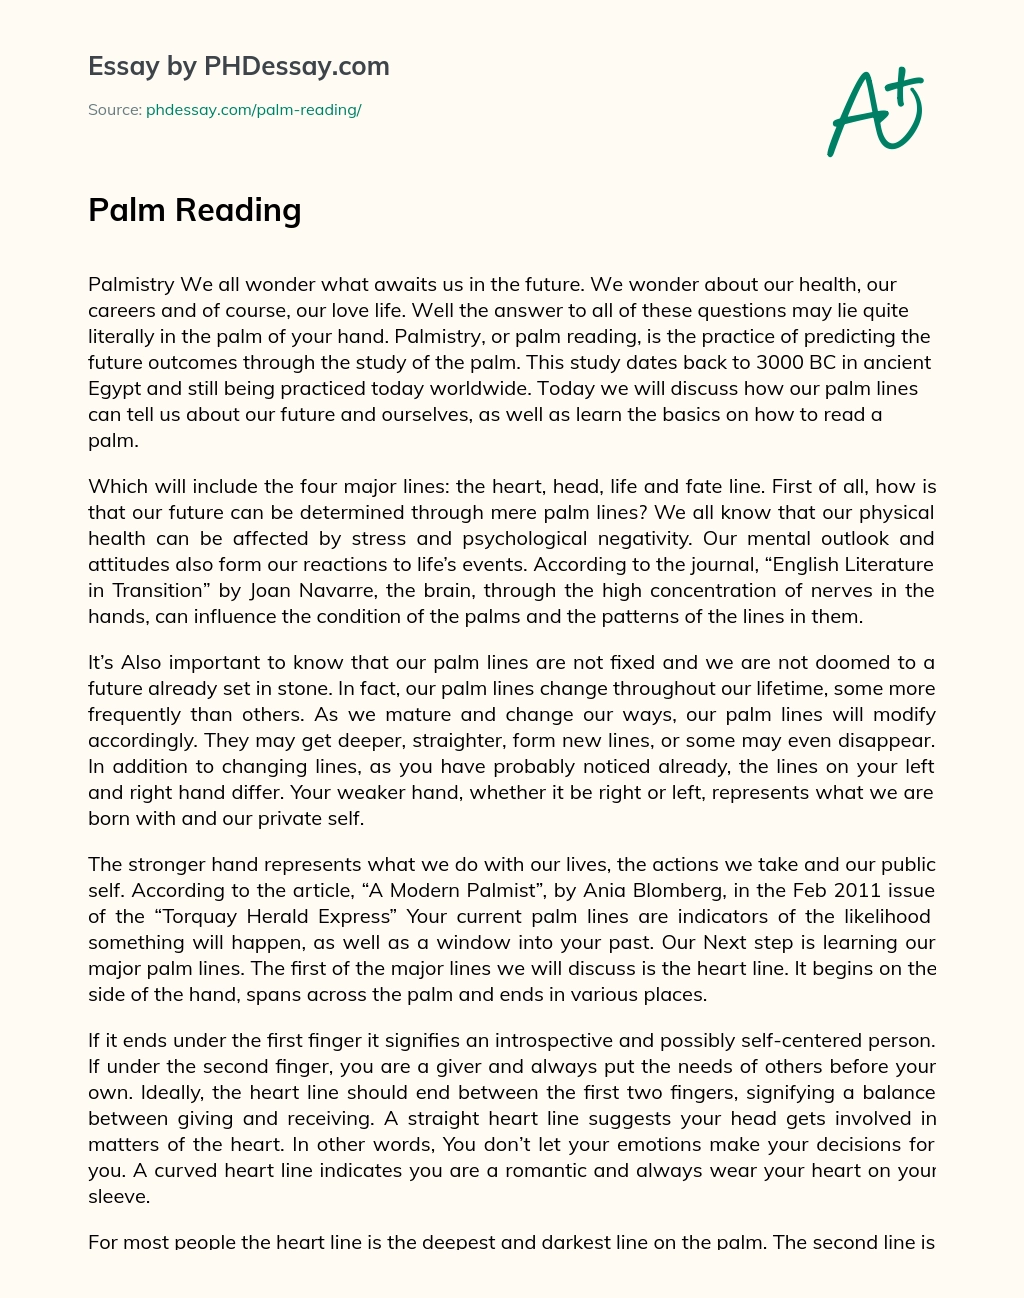 Palm Reading essay